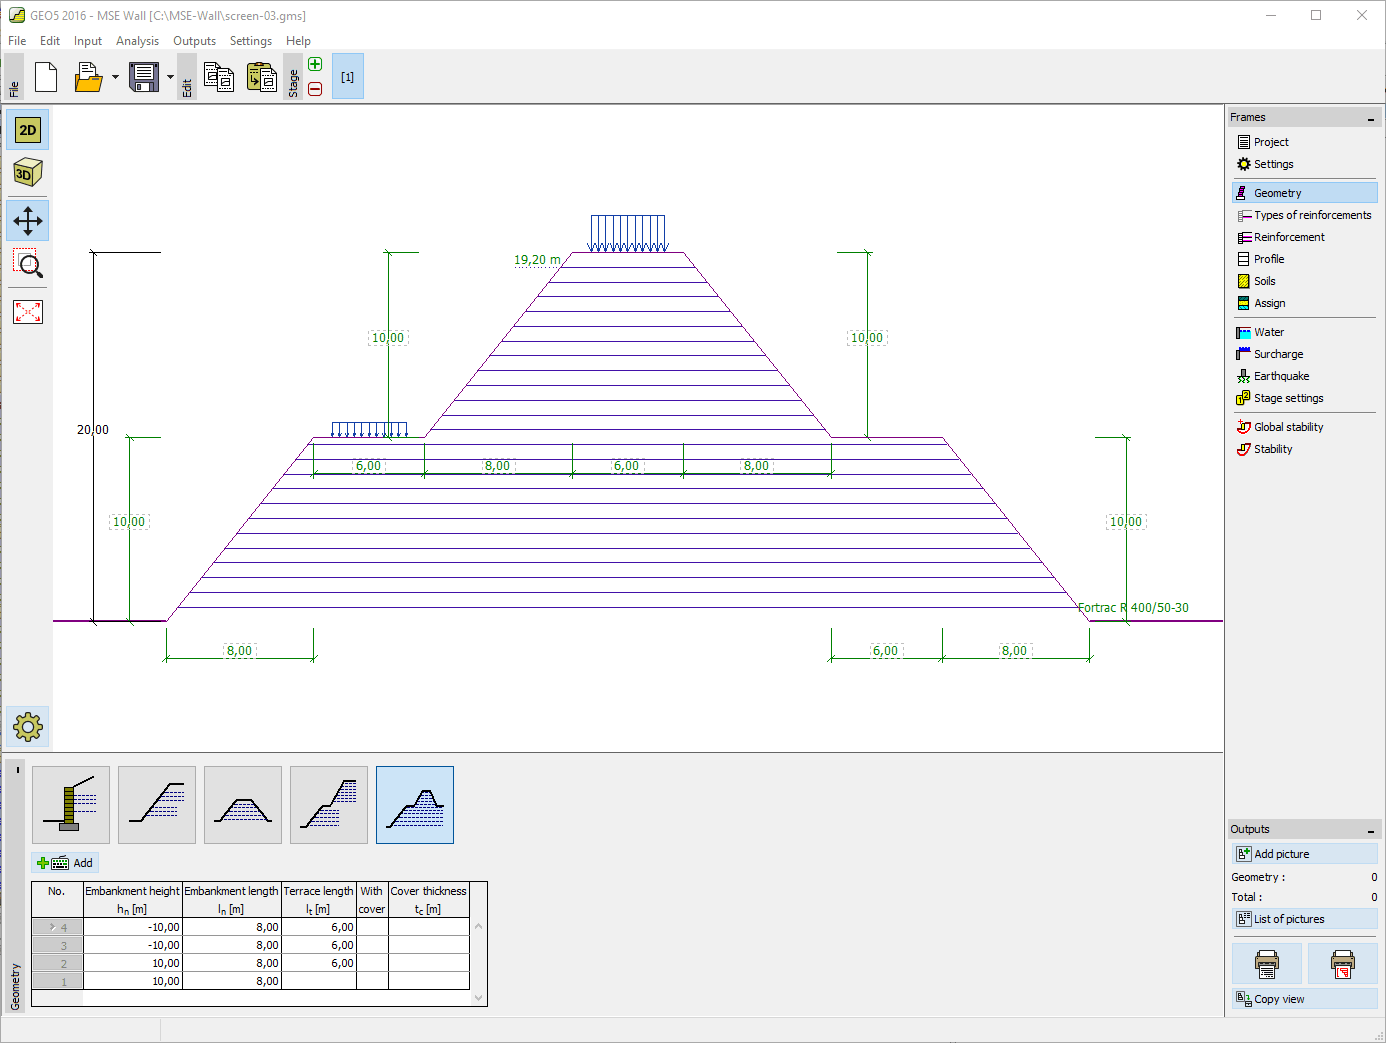 MSE Wall : Geometry input